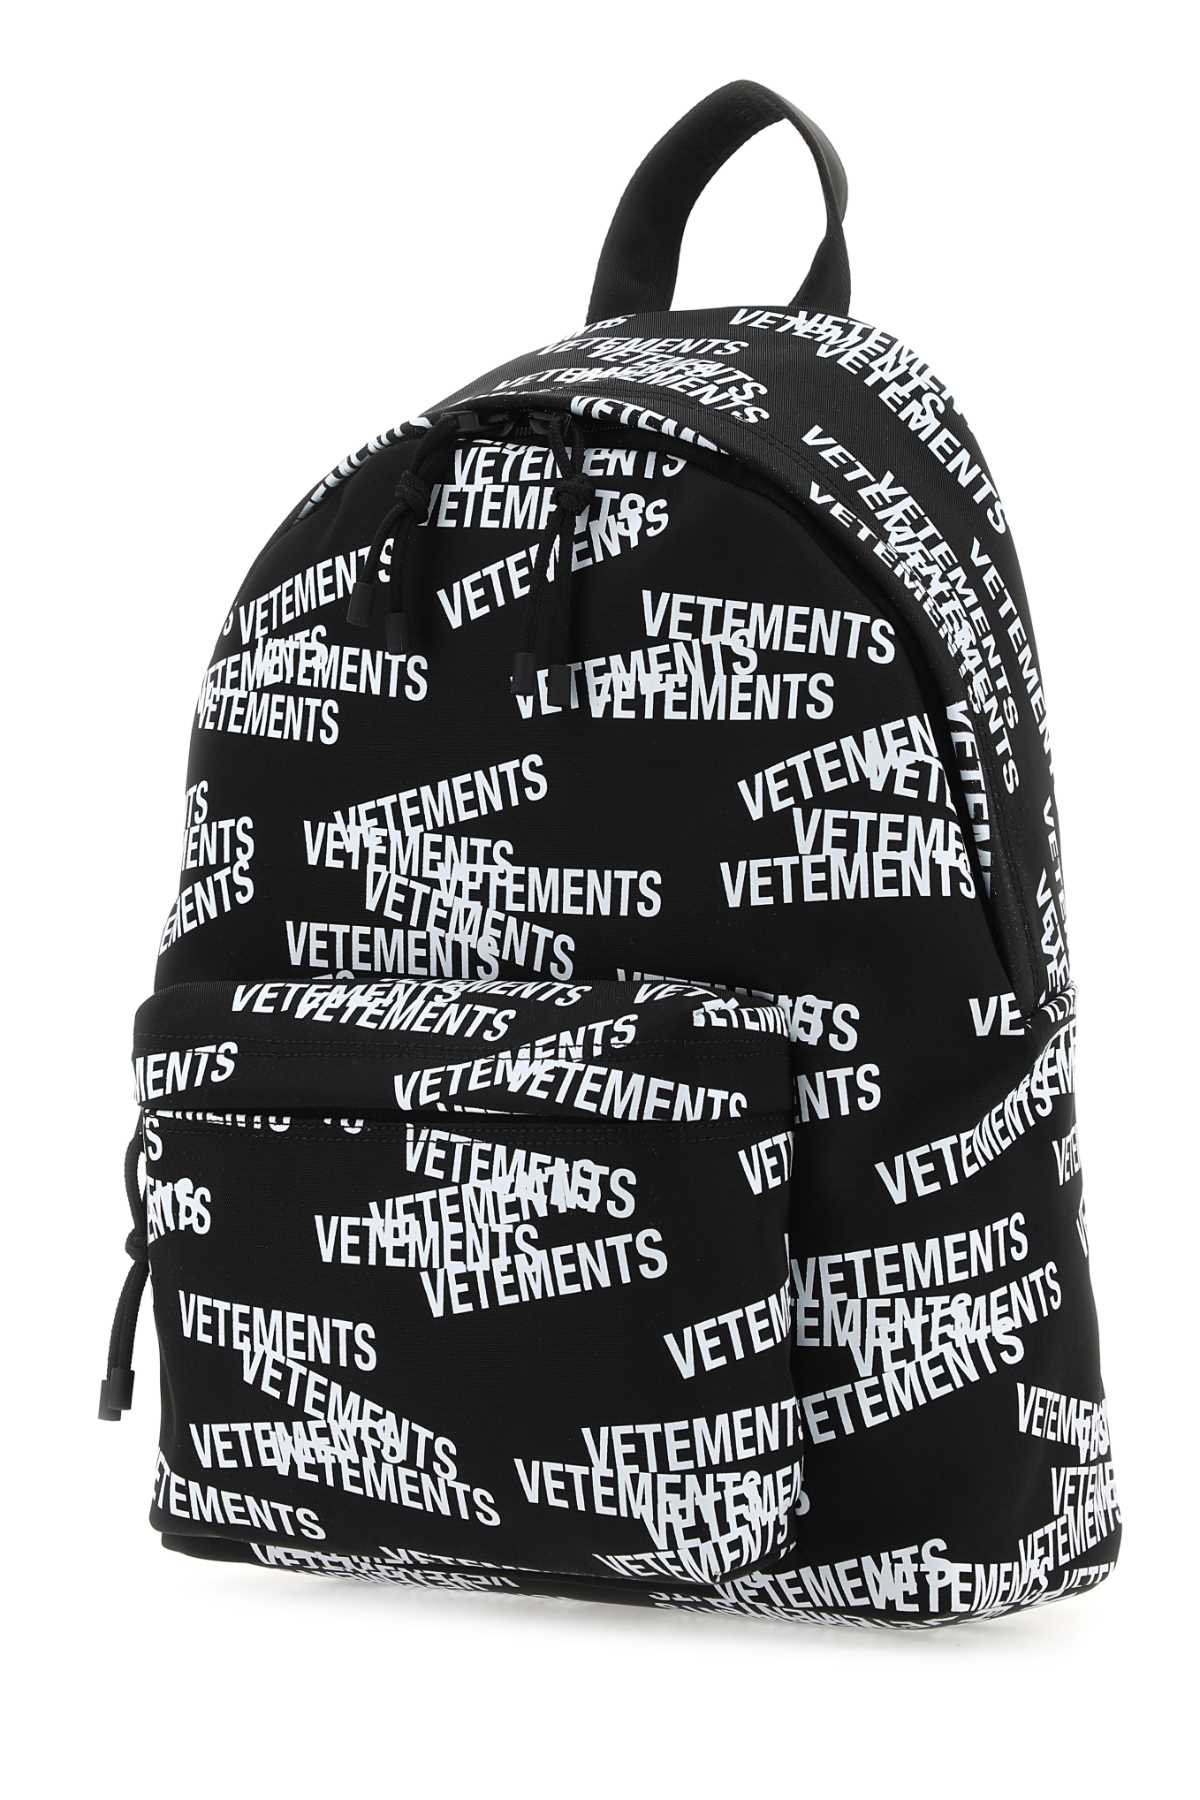 Shop Vetements Black Nylon Backpack